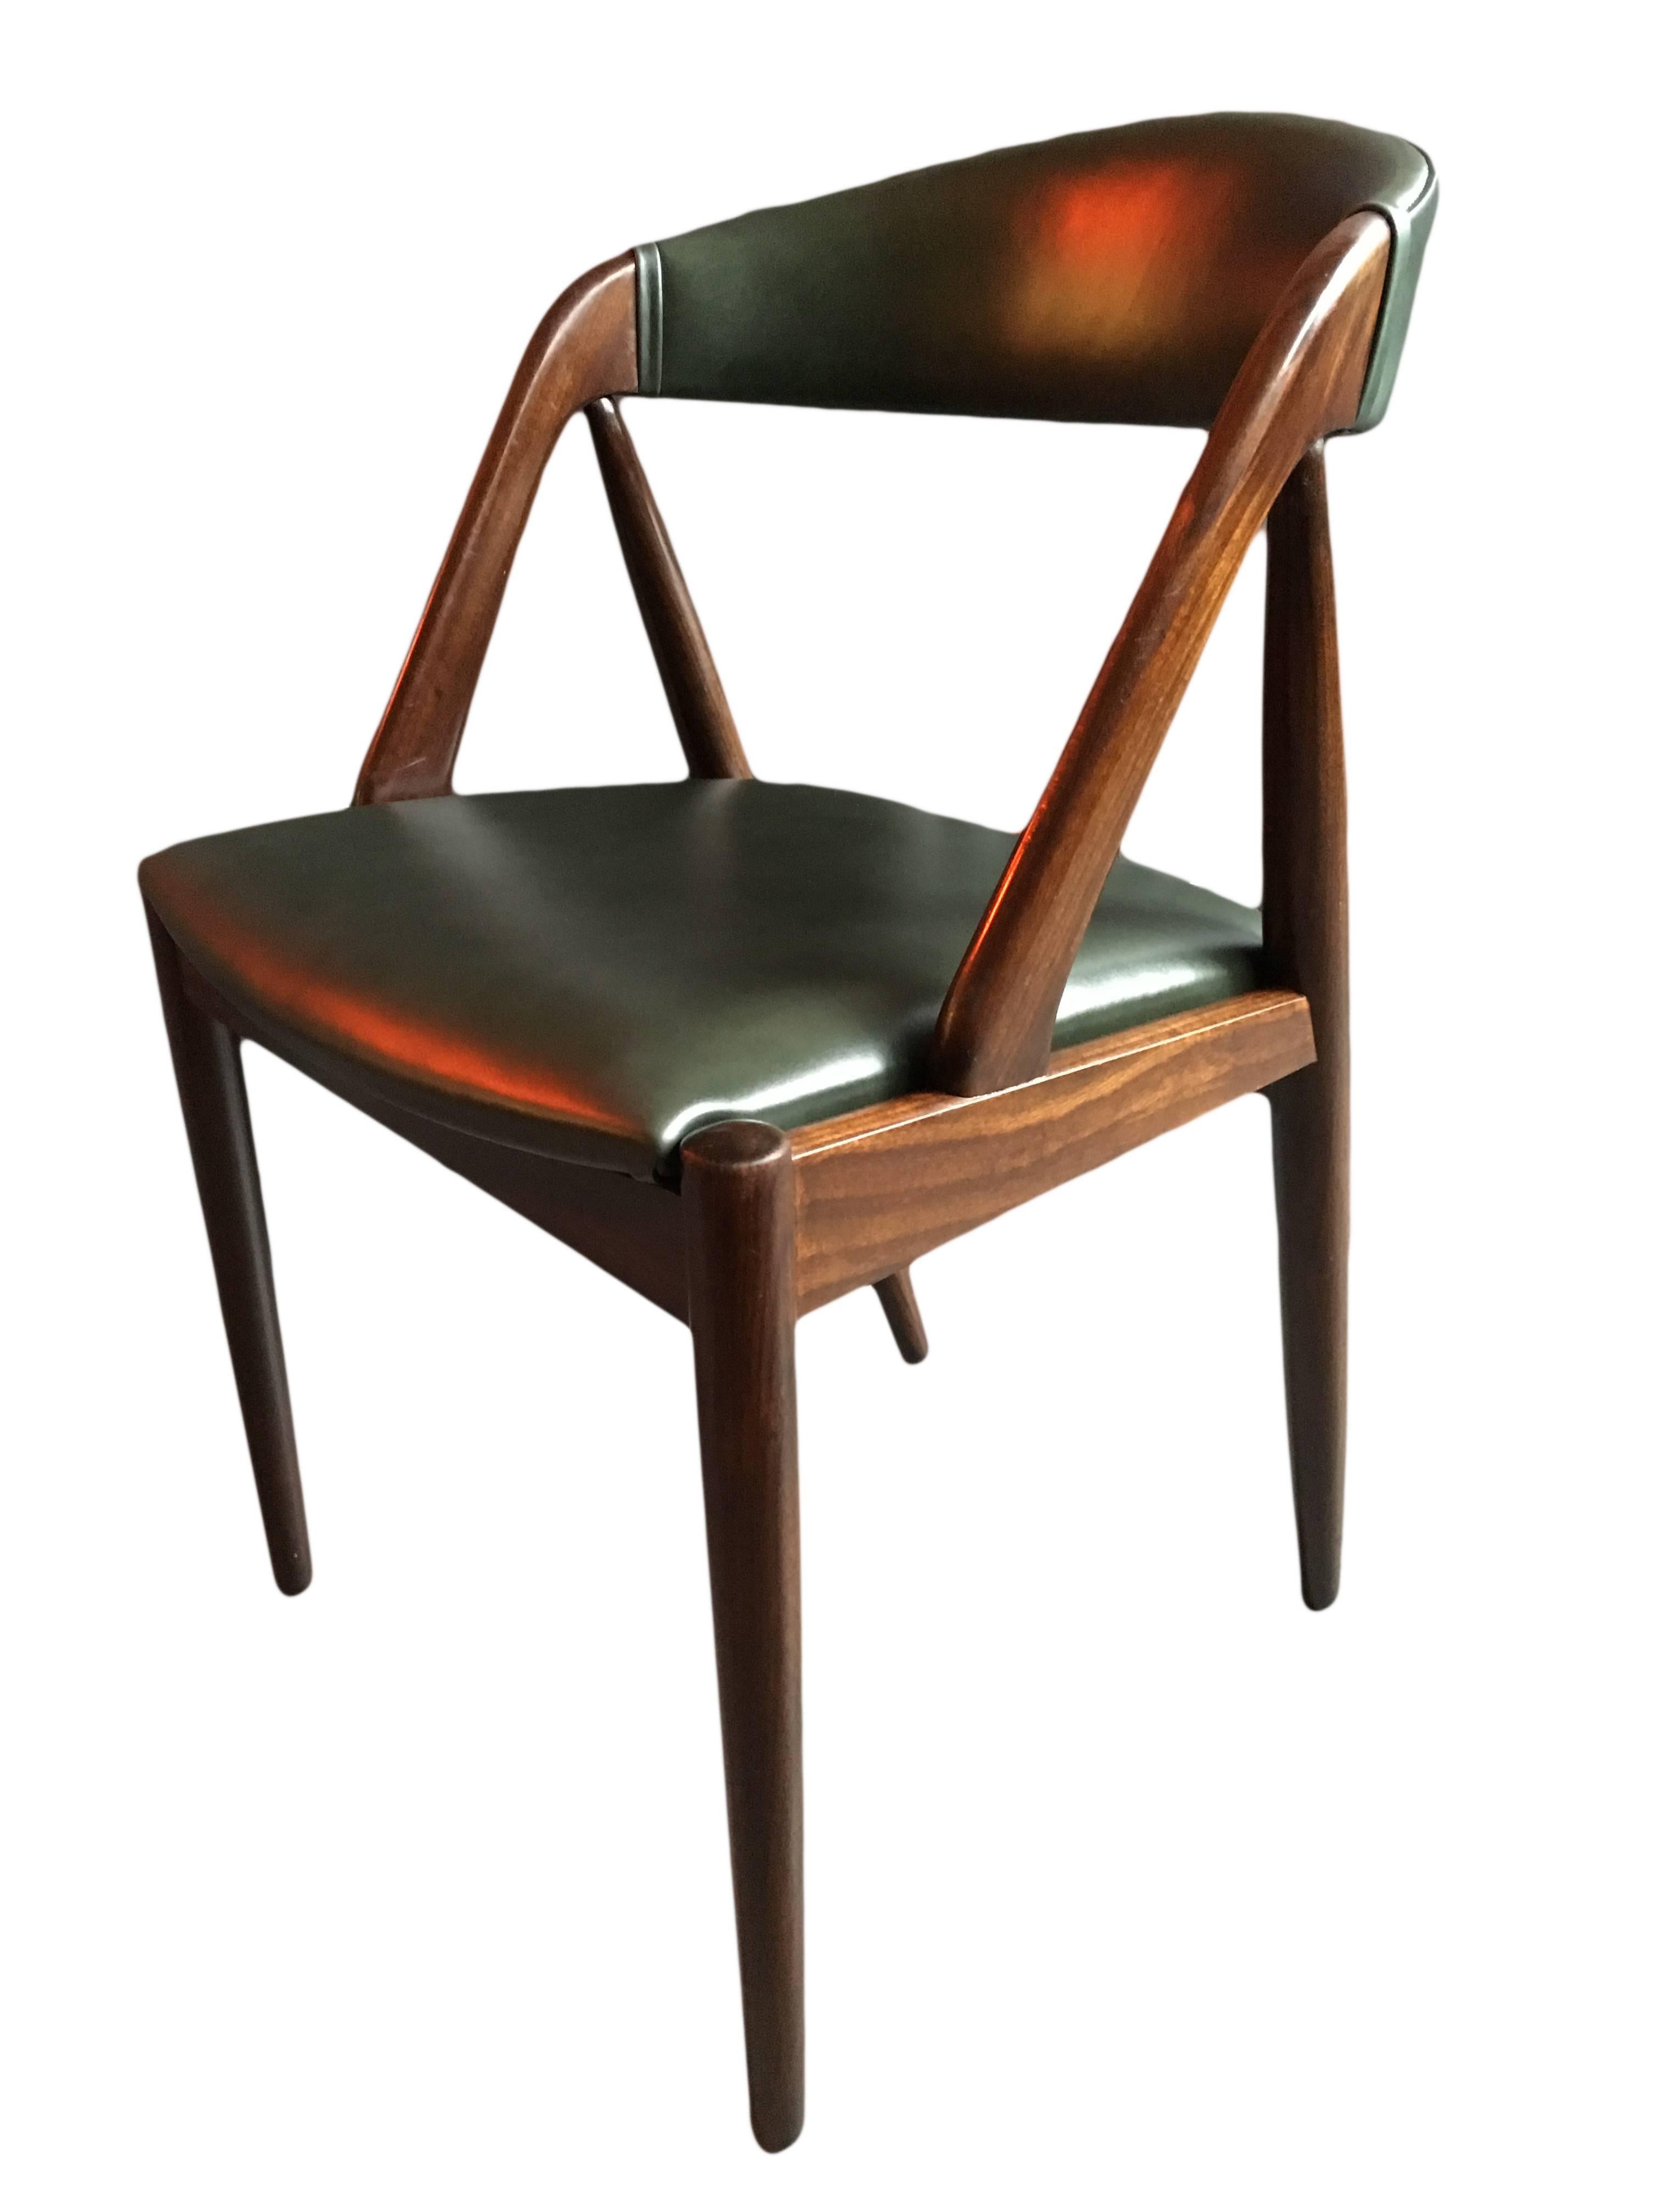 Mid-Century Modern Kai Kristiansen Dining Chairs, model 31, restored set of 4.